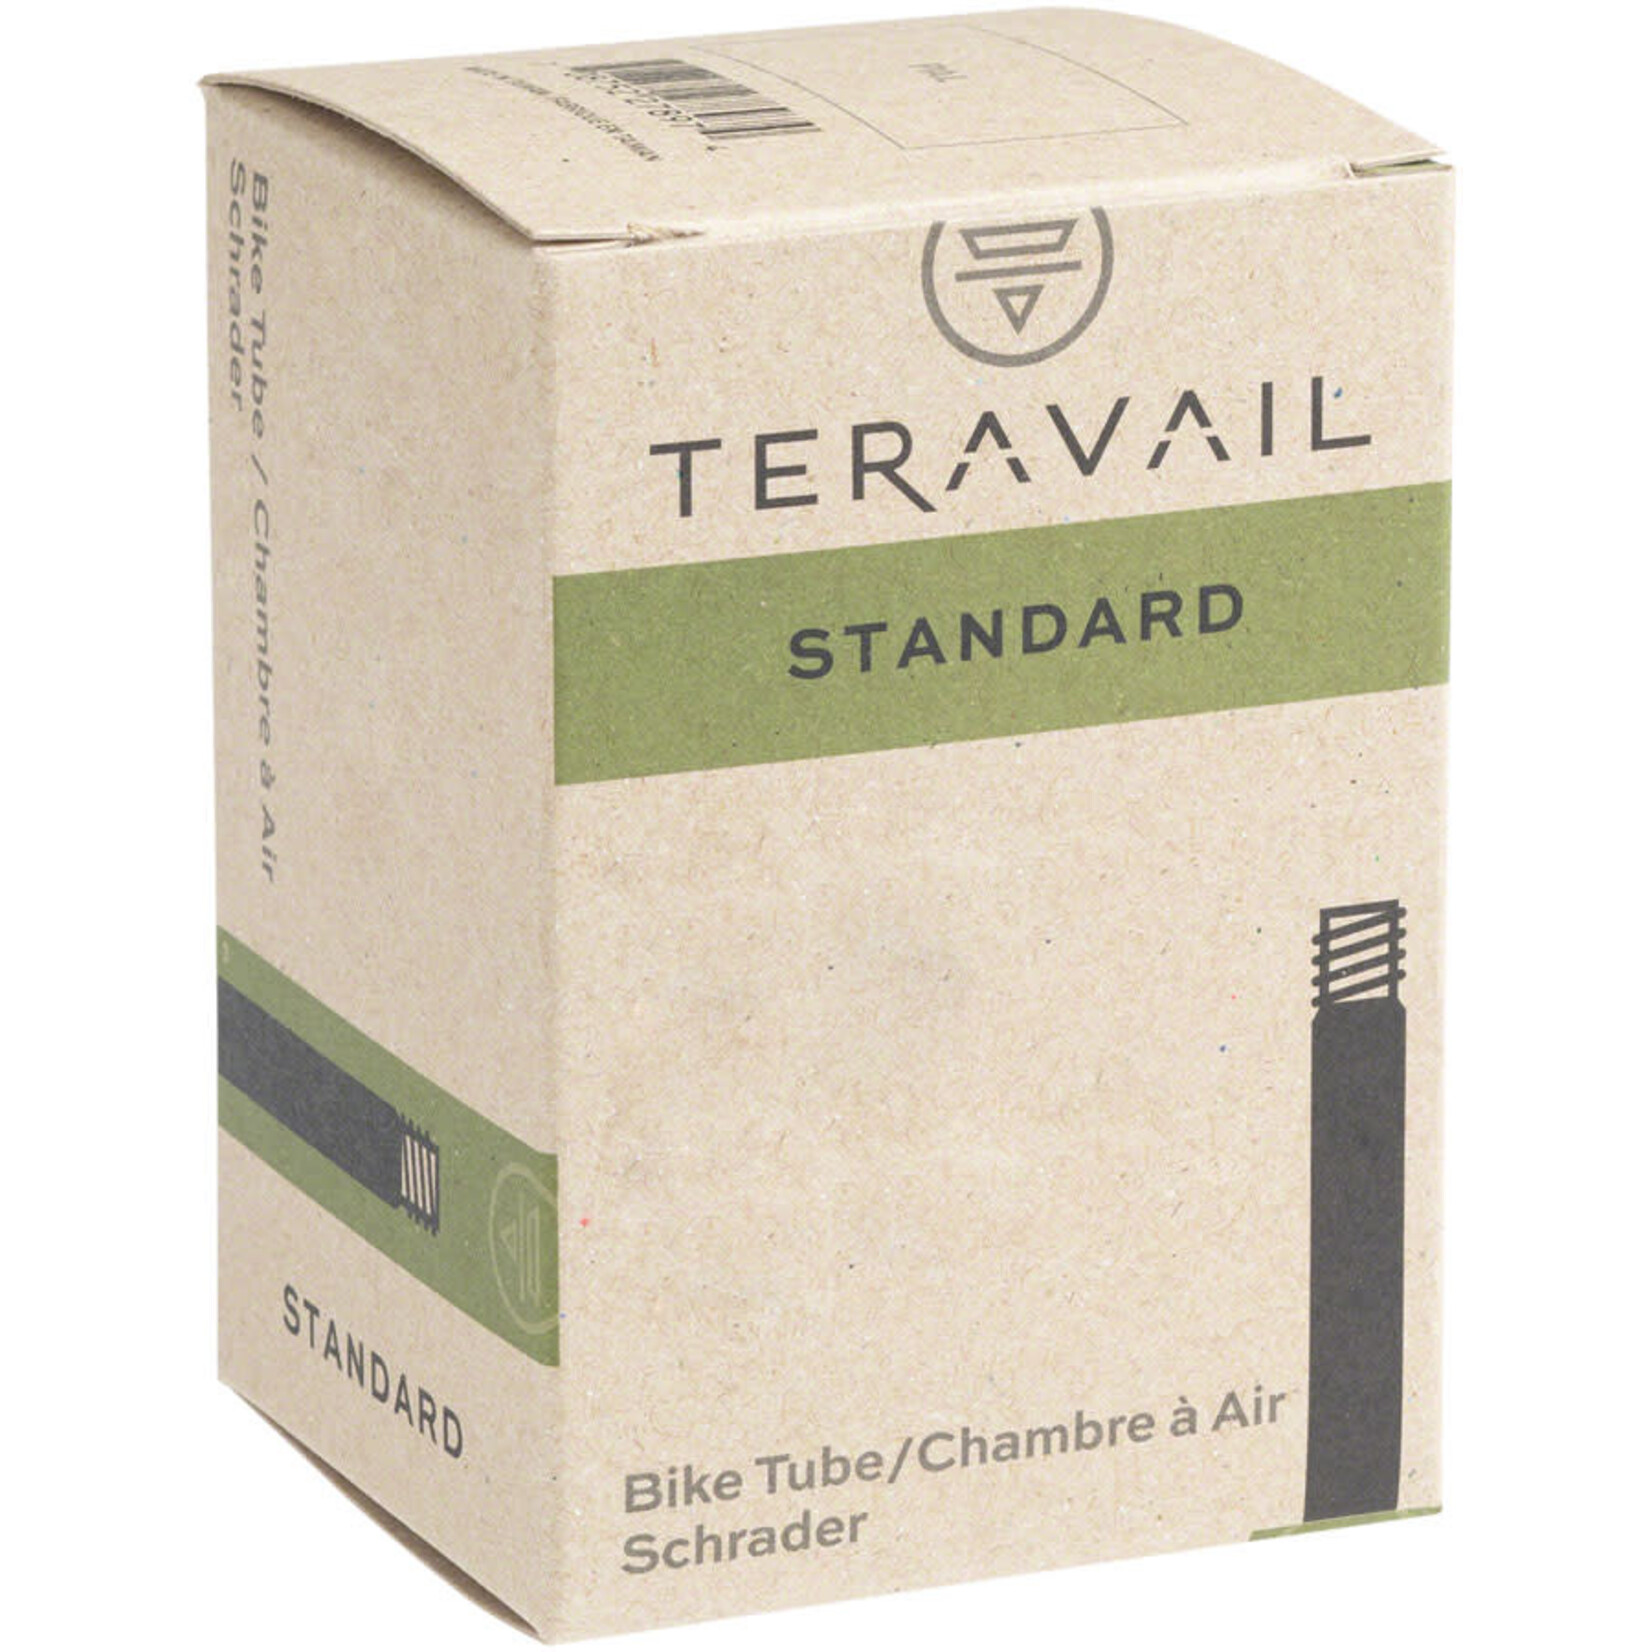 Teravail Teravail Standard Tube - 22 x 1.25 - 1.75, 35mm Schrader Valve